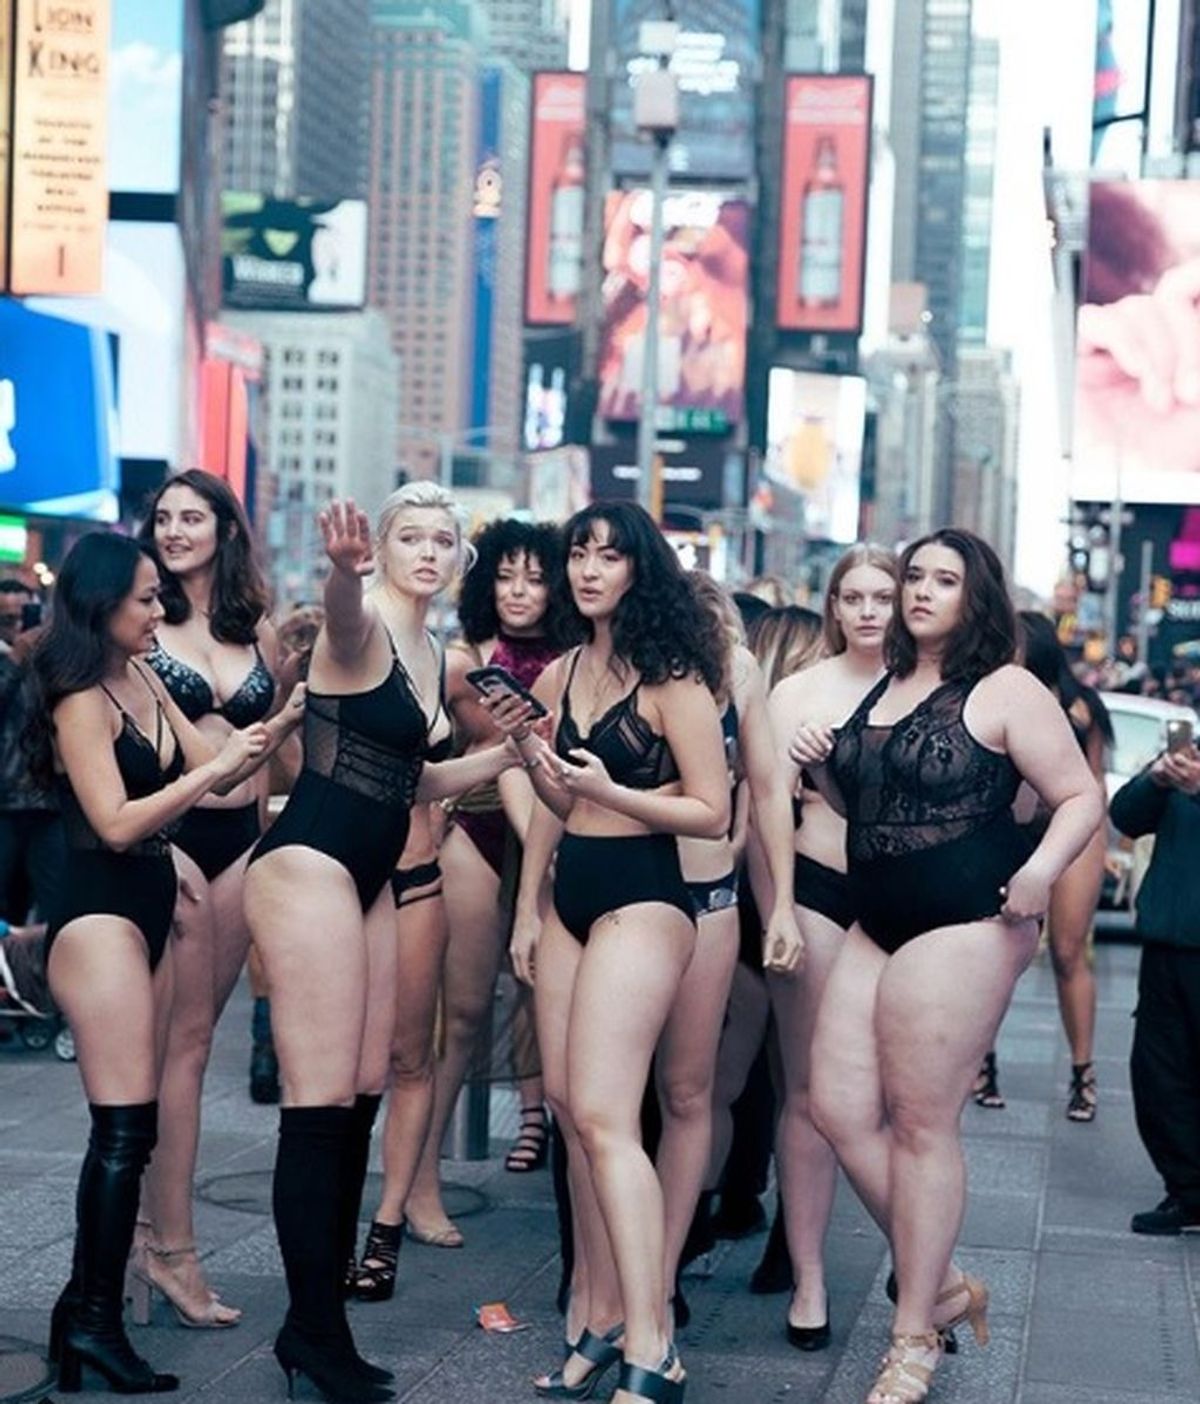 Modelos de talla grande en lencería paralizan Times Square para reivindicar su belleza